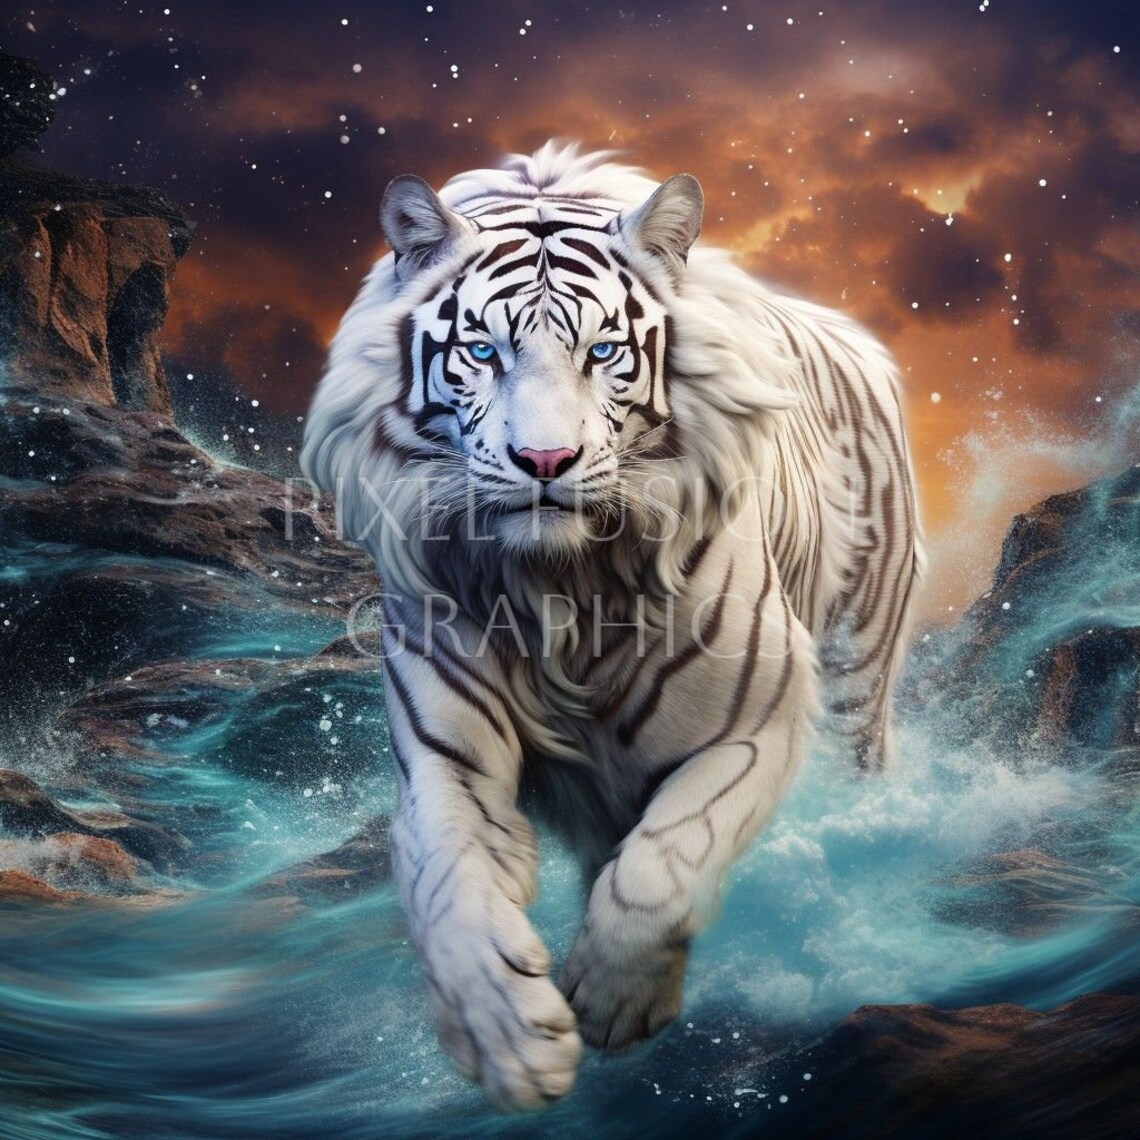 Fantasy White Tiger Clip Art, 16 JPG High Quality Quality, 300 DPI ...